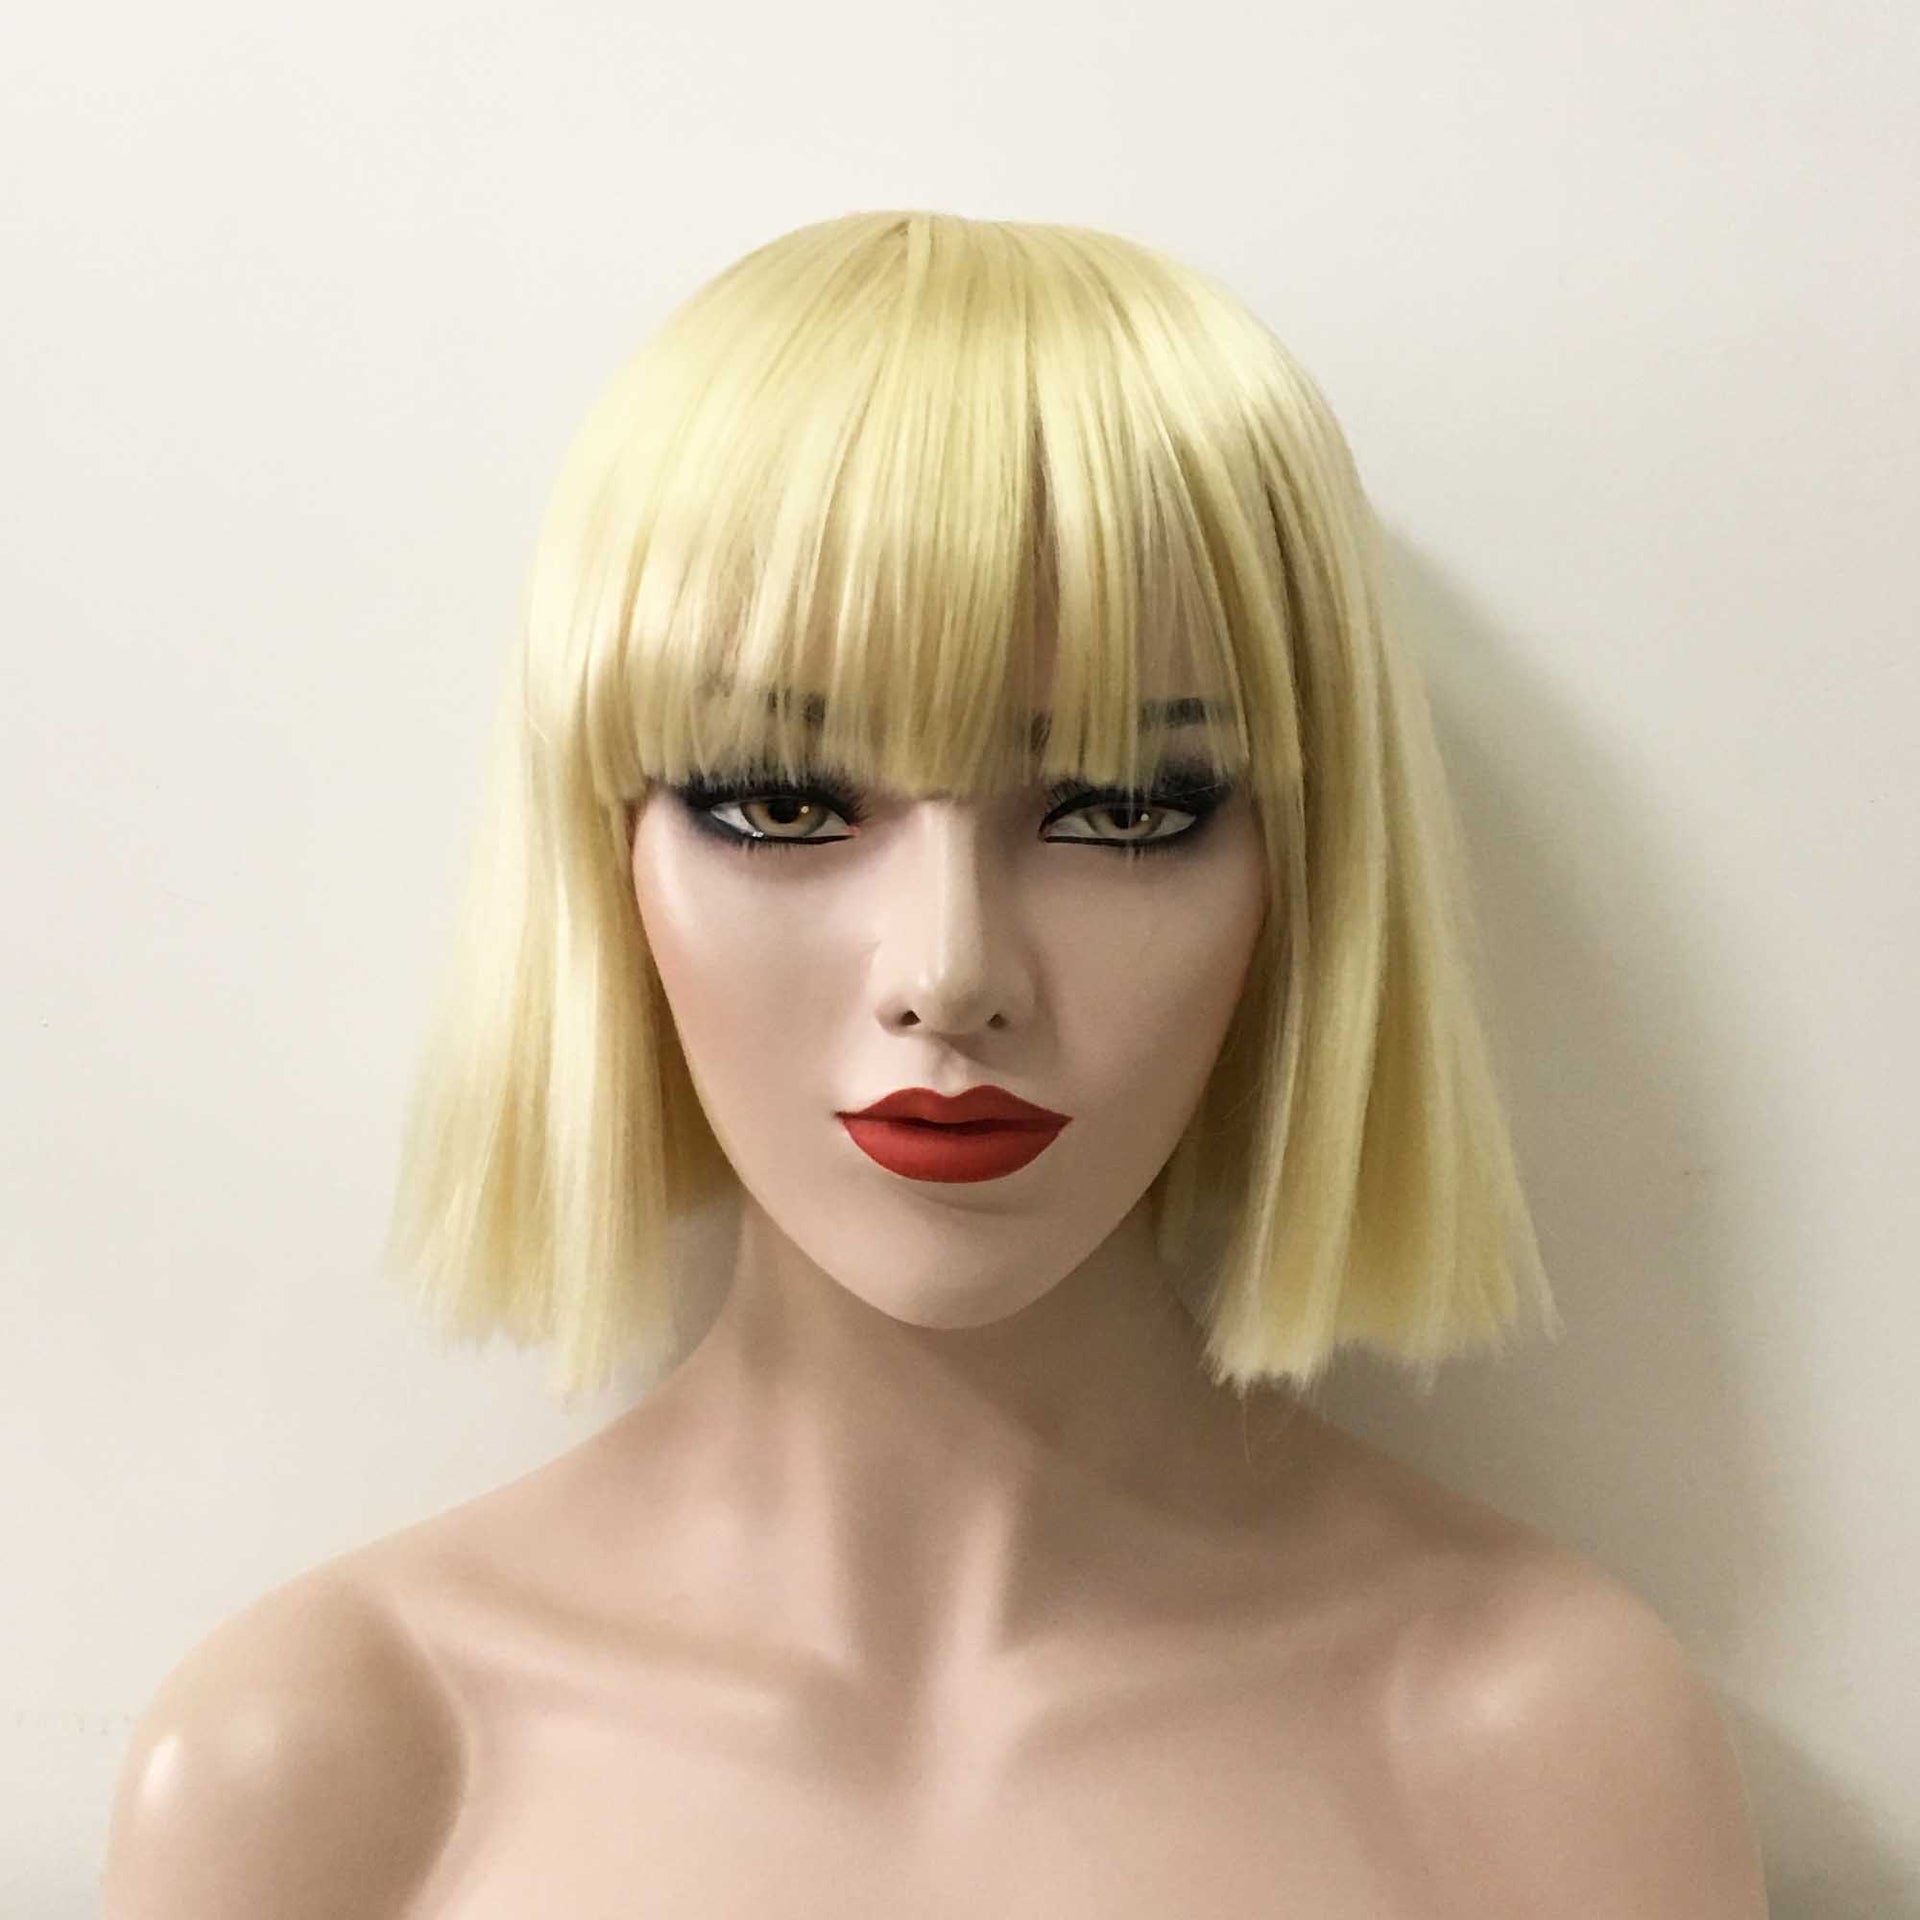 nevermindyrhead Women Blonde Short Straight Bob Yaki Fringe Bangs Wig